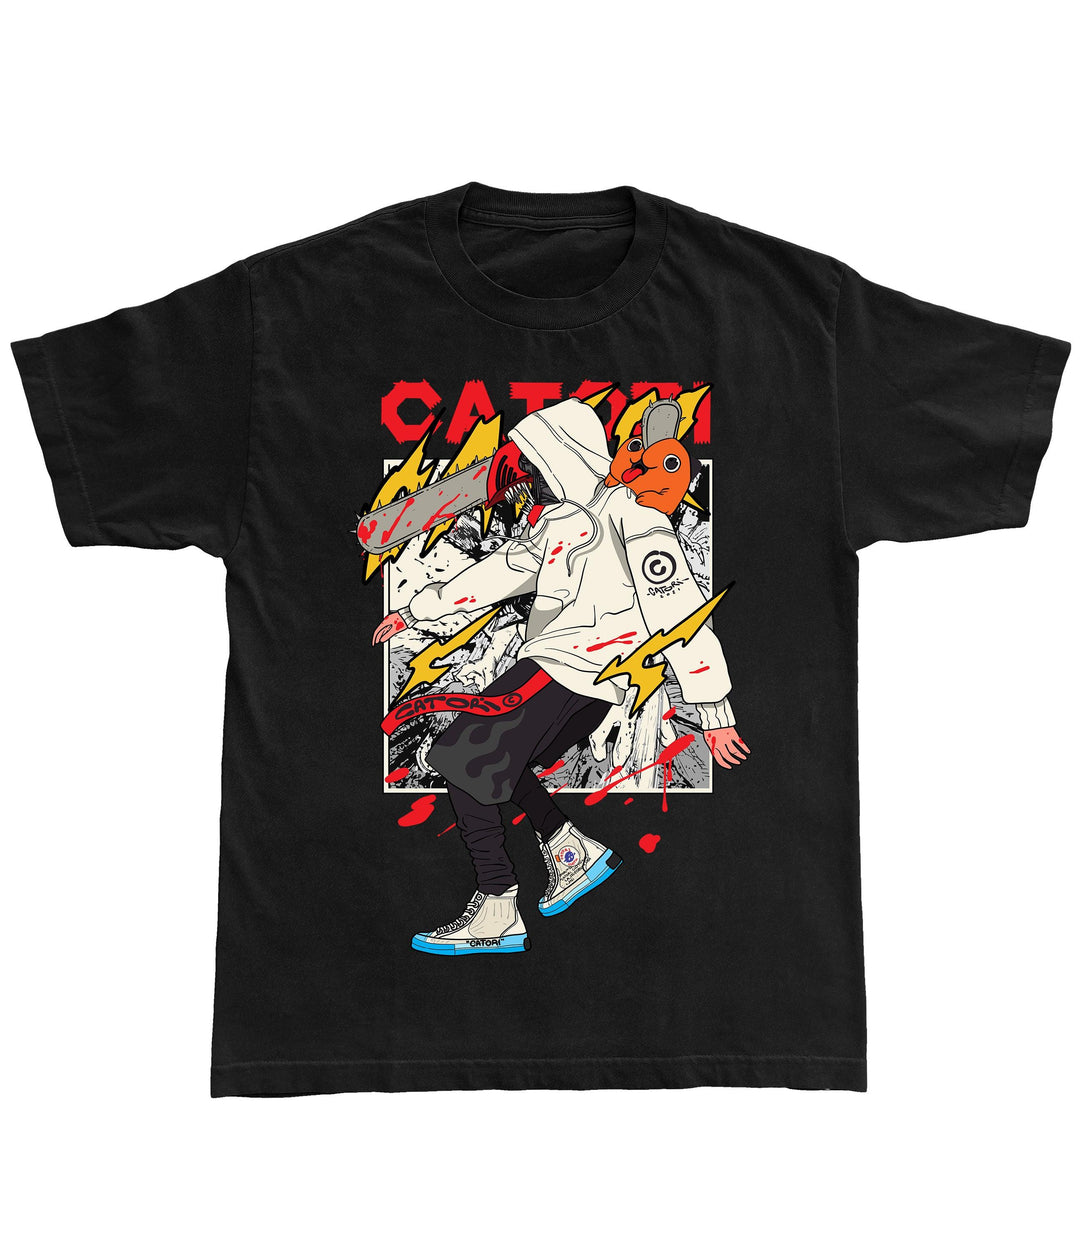 Killer Instinct T-Shirt at Catori Clothing | Graphic & Anime Tees, Hoodies & Sweatshirts 